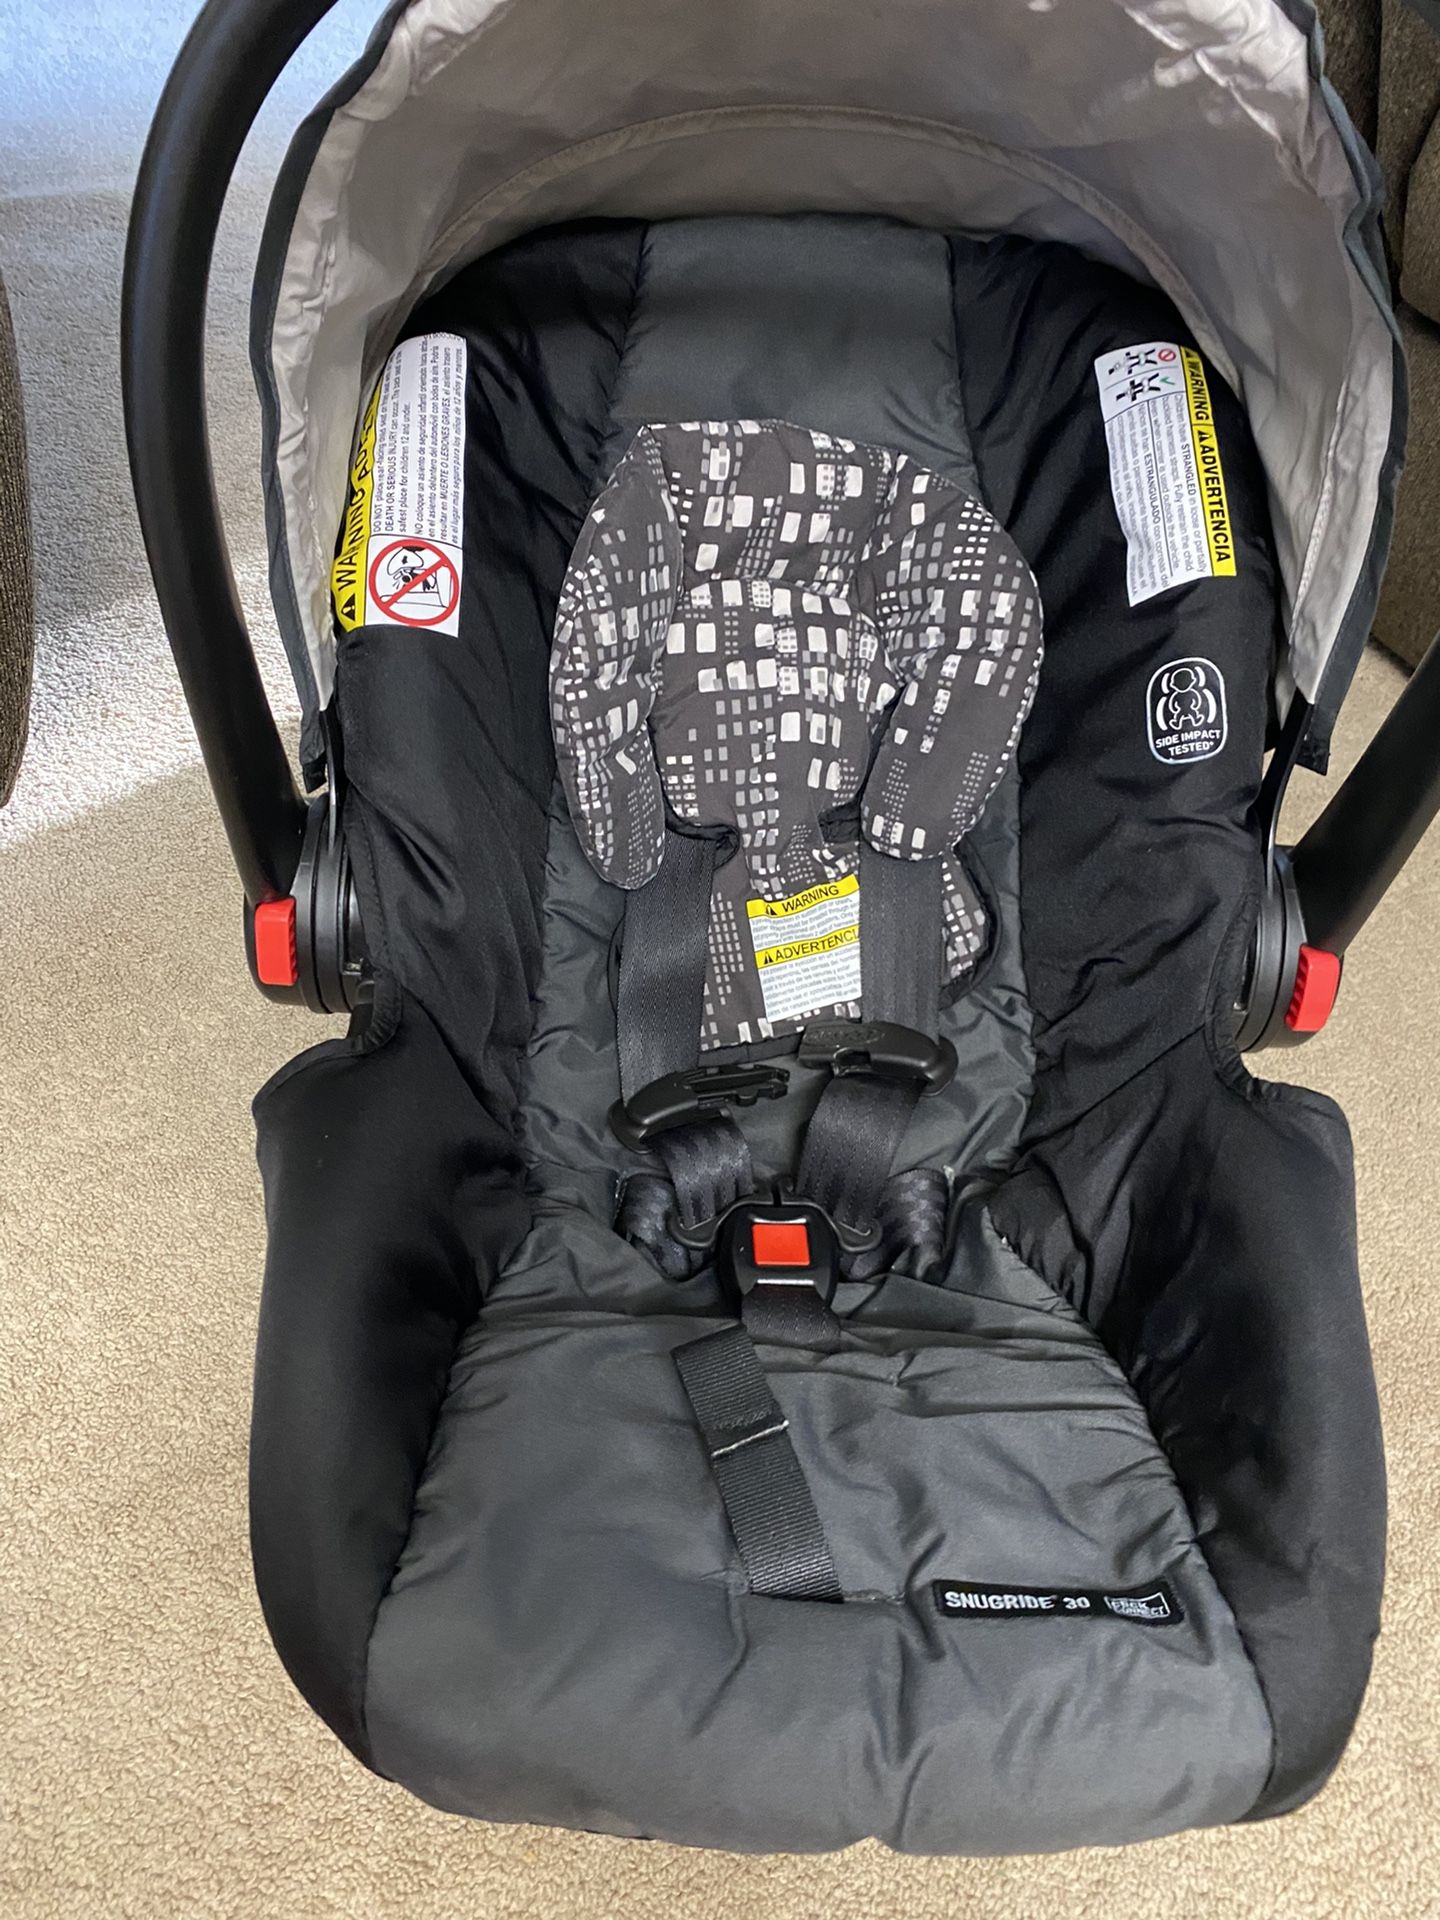 Gracie Snug 30 infant car seat